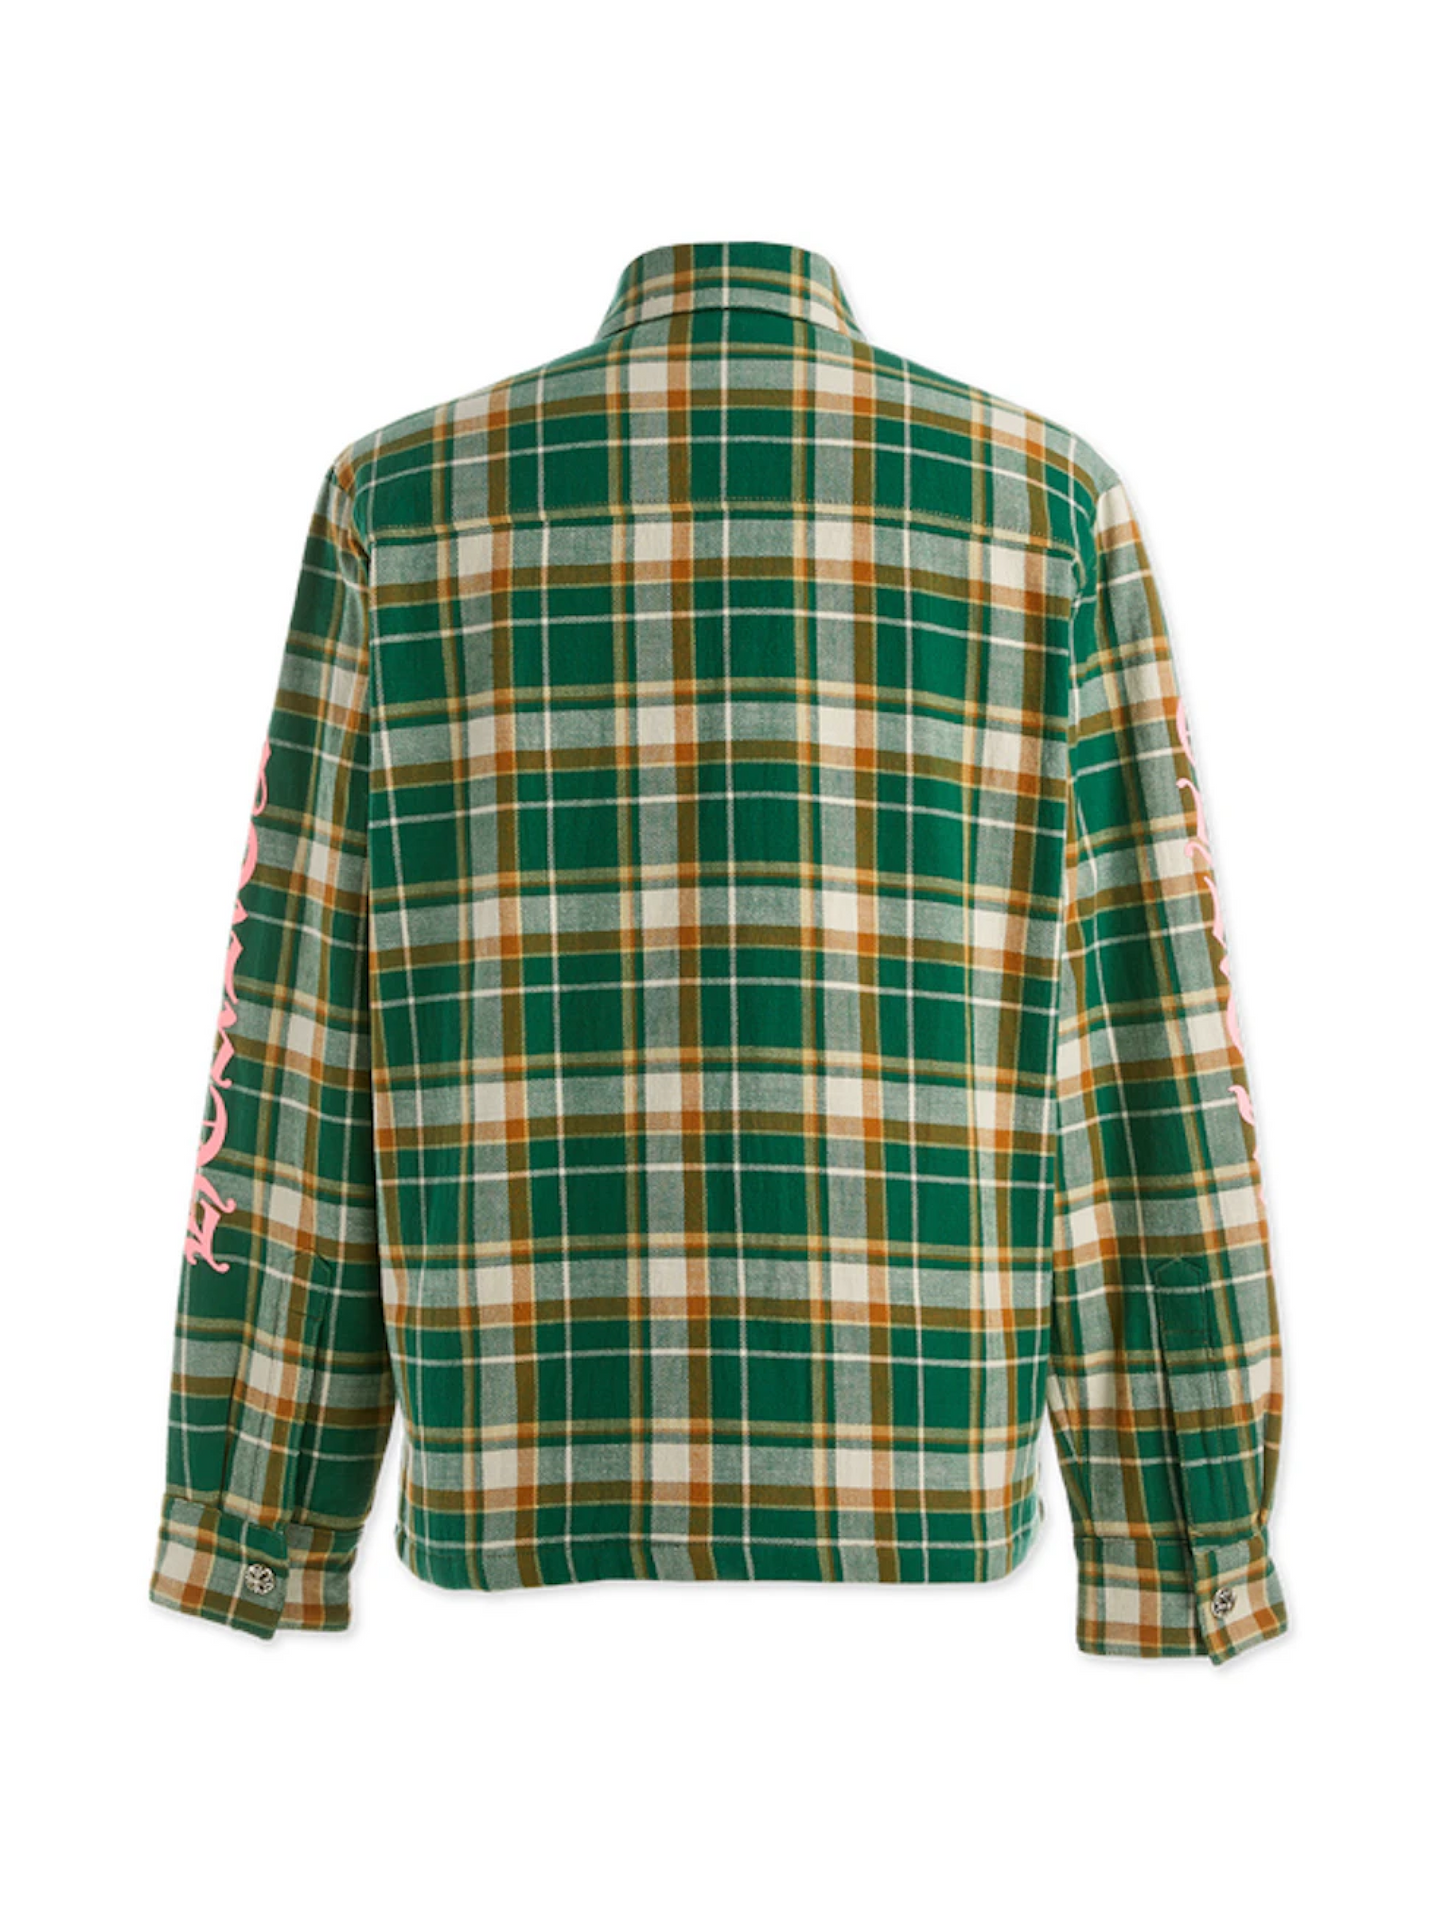 Chrome Hearts CH Flannel Green Shirt Jacket